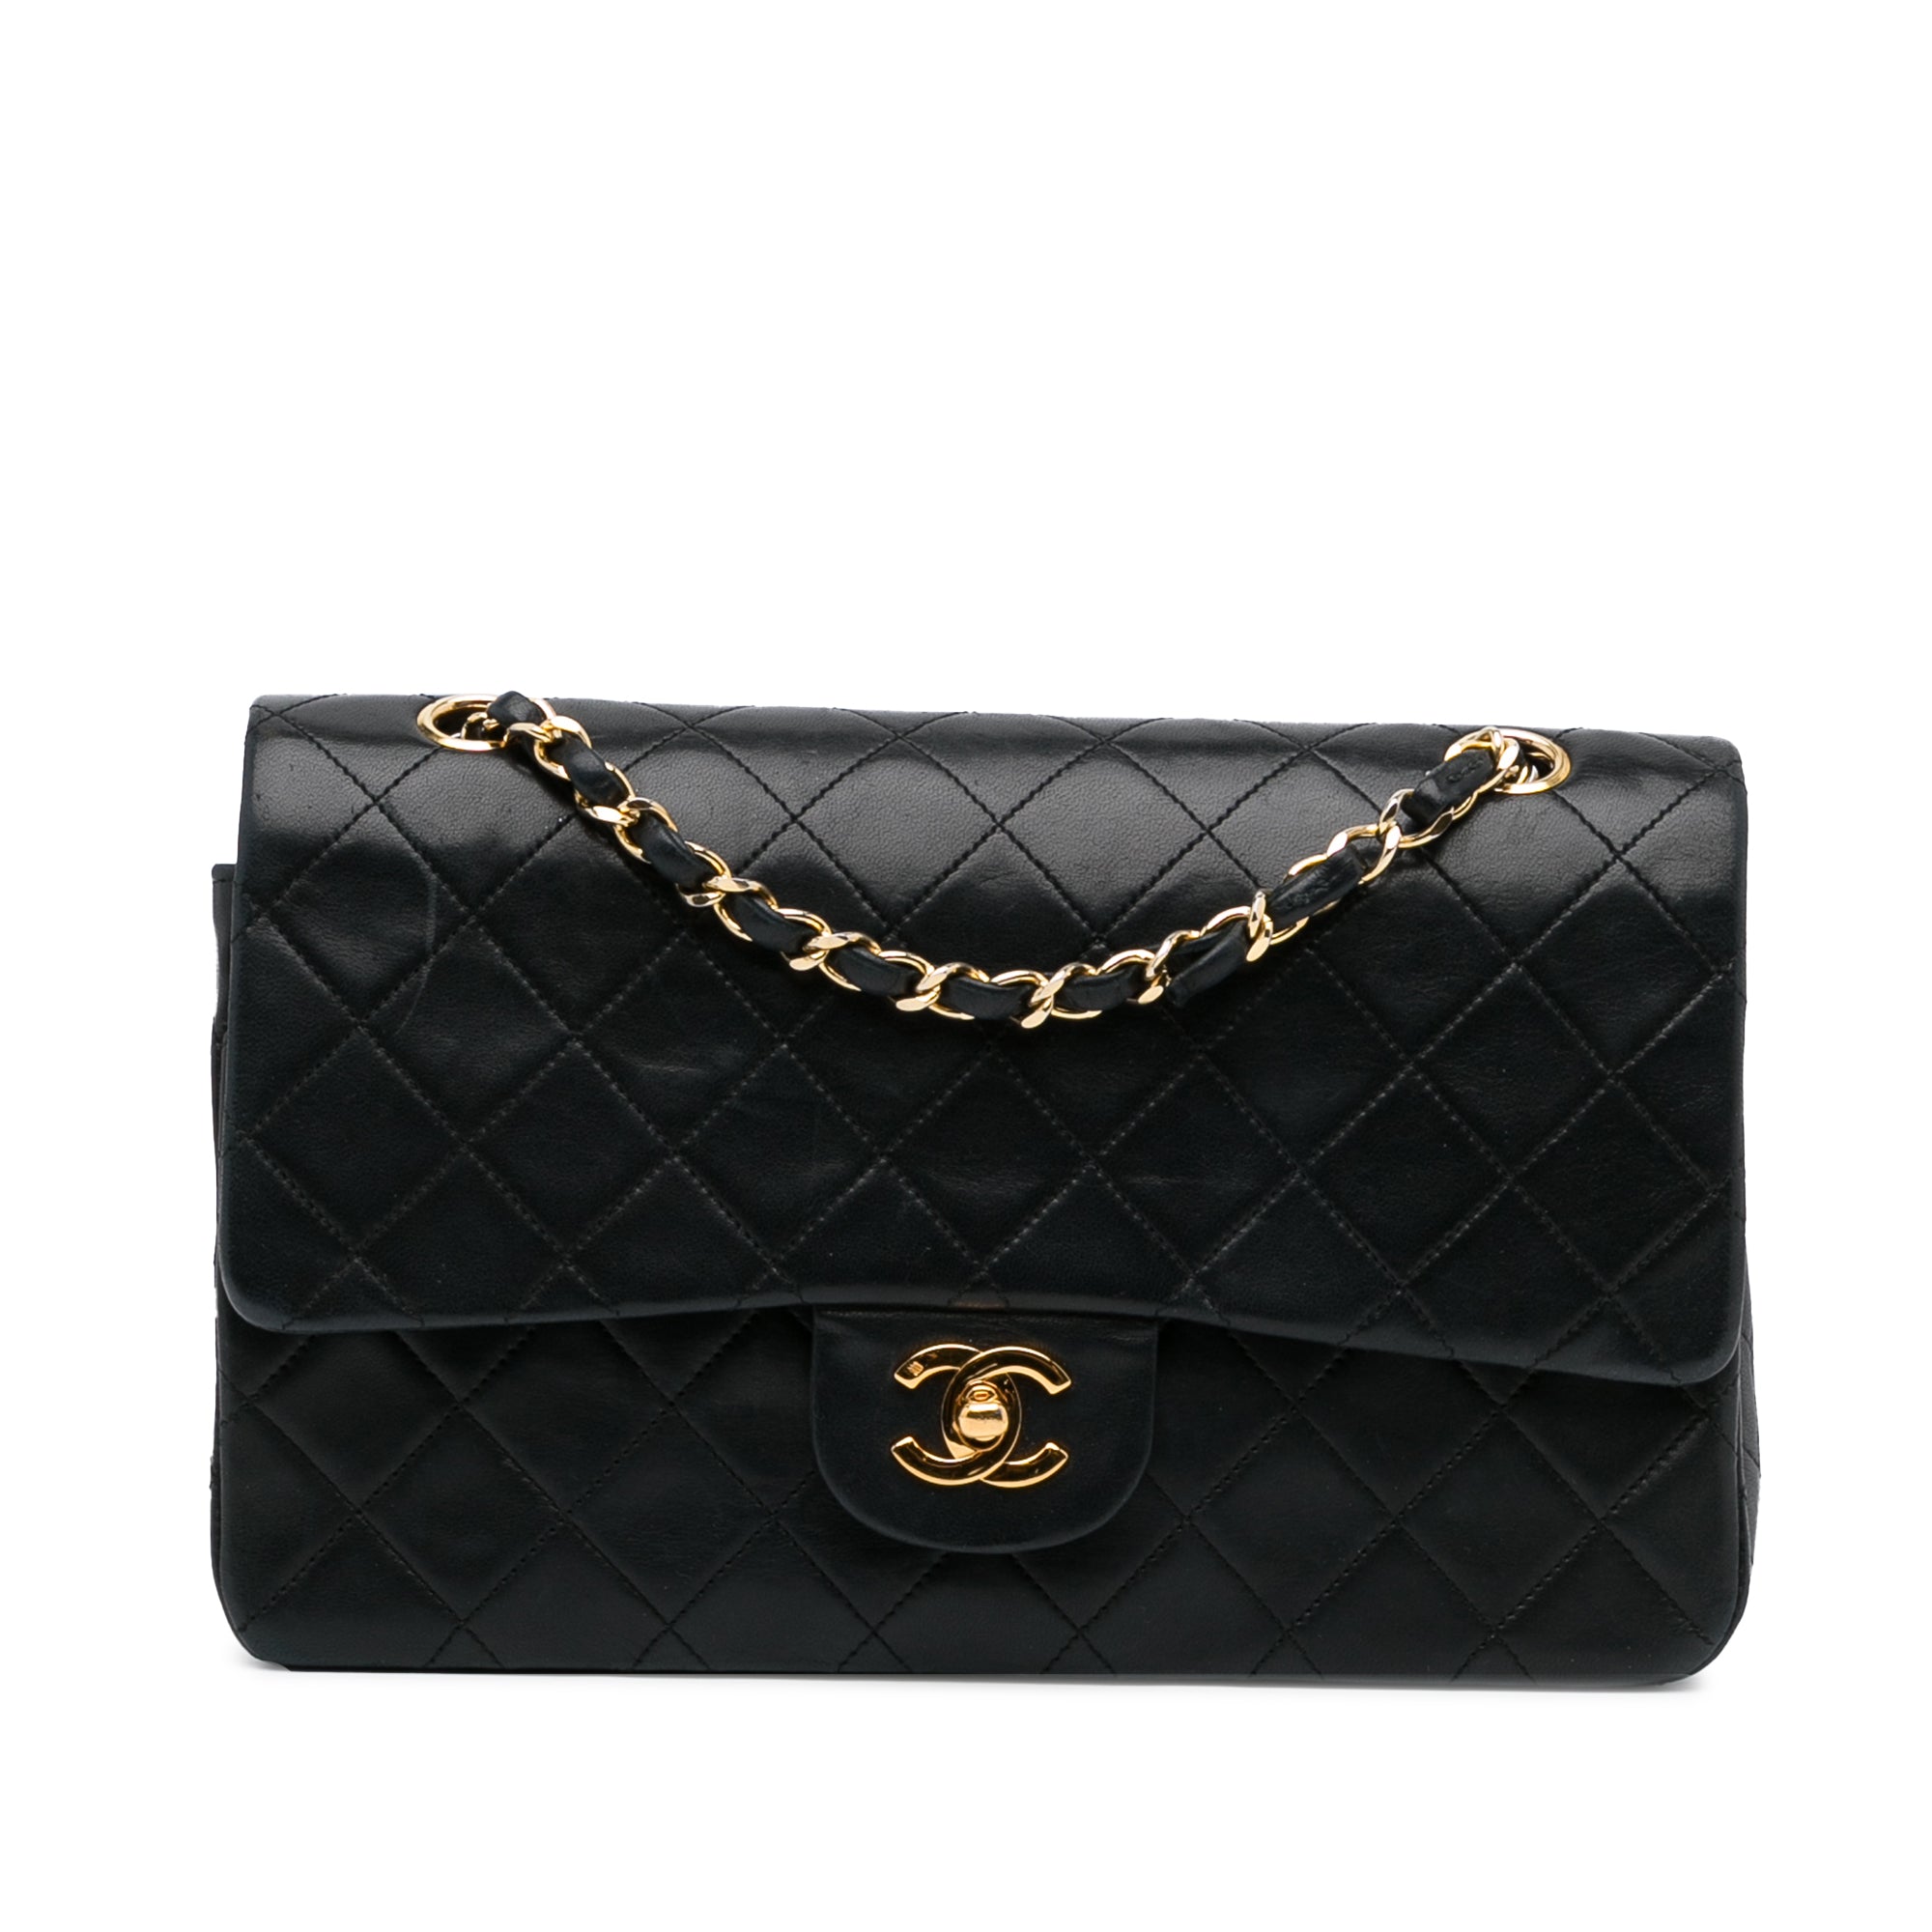 Black Chanel Medium Classic Lambskin Double Flap Shoulder Bag, Chanel  Classic Flap Bag Small Lambskin Leather